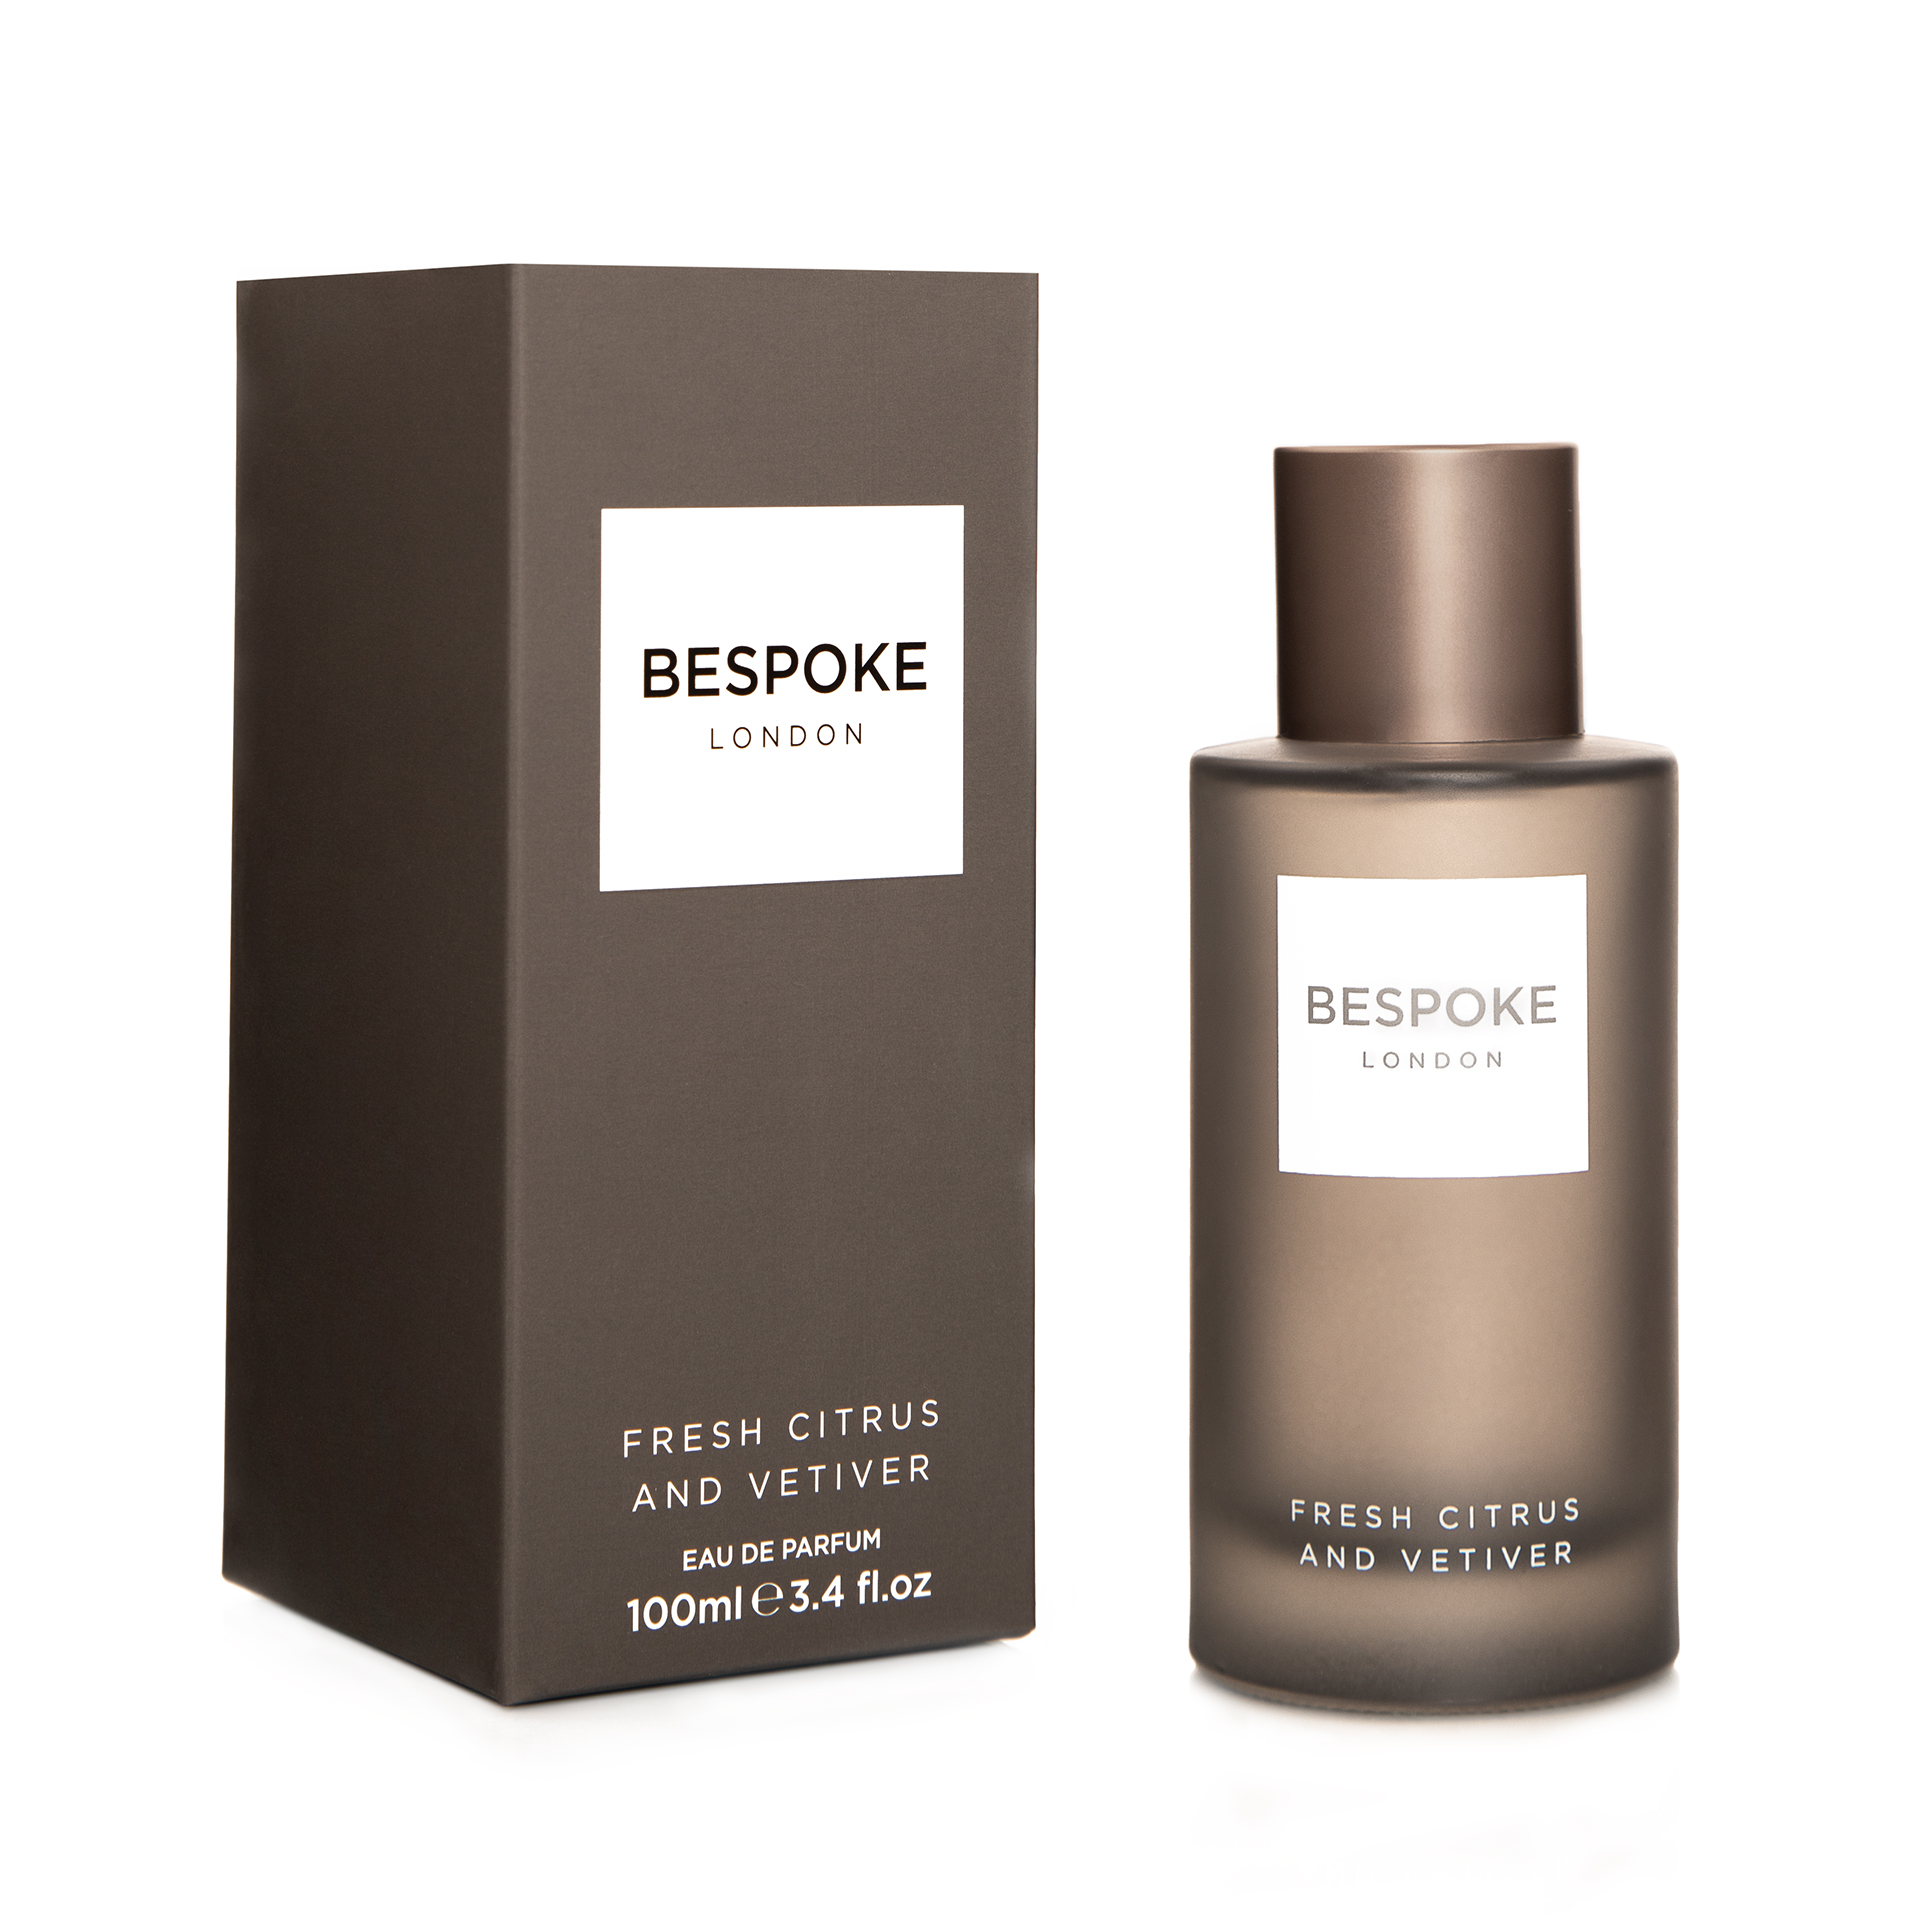 Grey Bespoke London fragrance bottle and matching box.